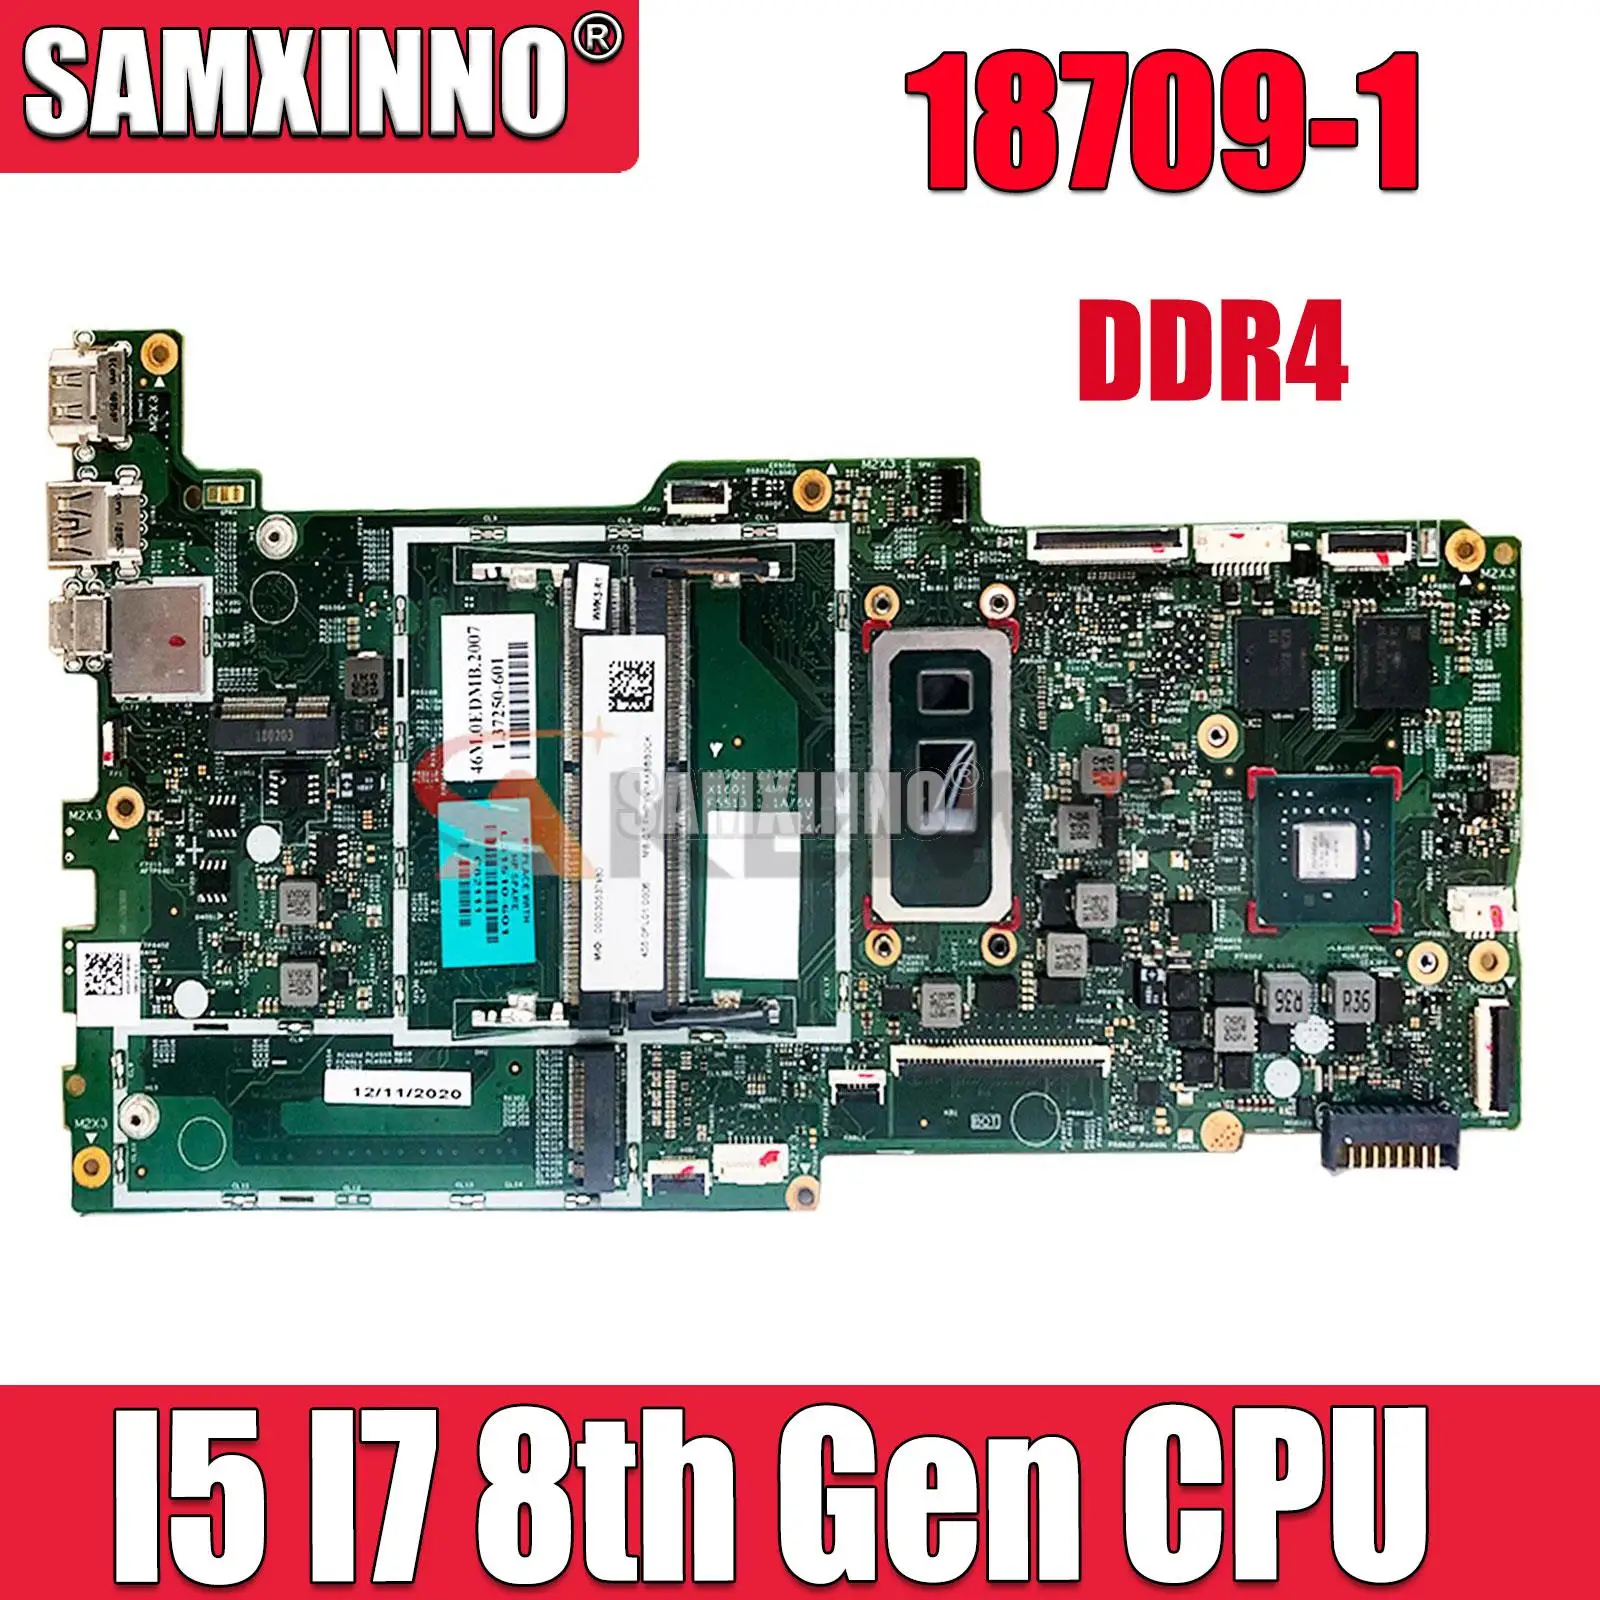 

18709-1 Motherboard for HP ENVY X360 15-CN 15T-CN Laptop Motherboard with SREJQ I5 I7 8th Gen CPU MX150 4GB GPU DDR4 100% Tested